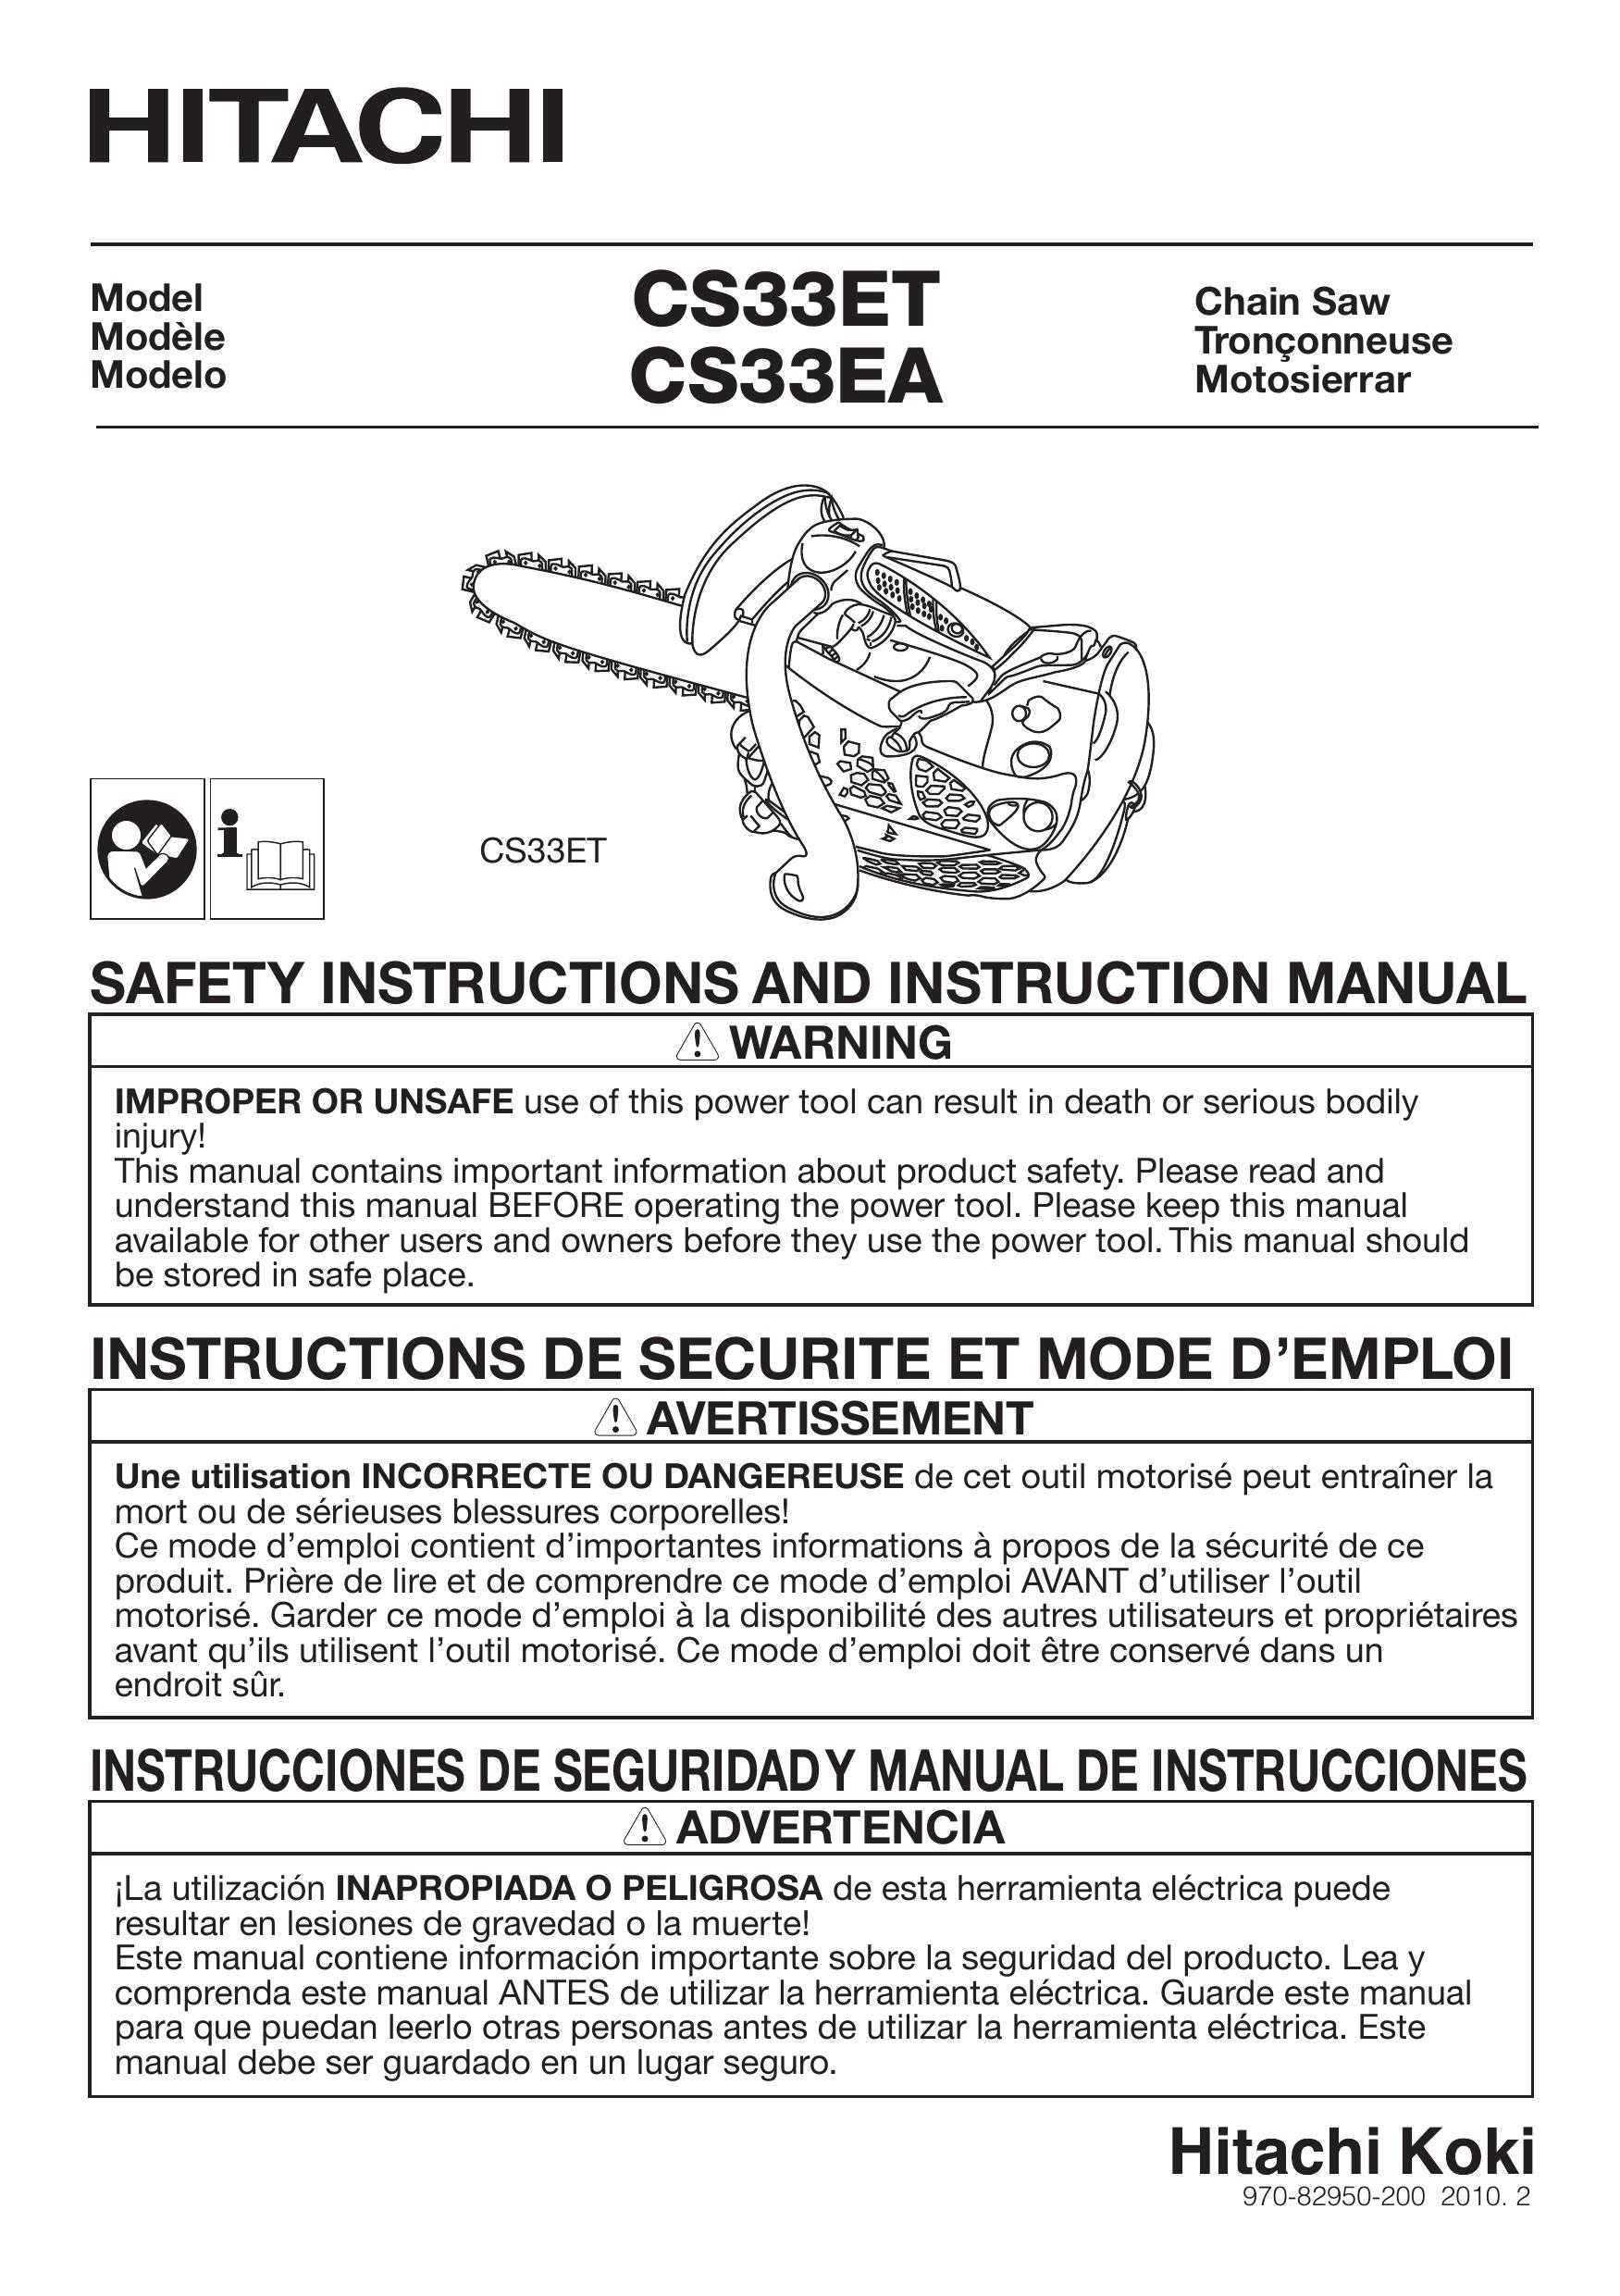 Hitachi Koki USA CS33ET Chainsaw Sharpener User Manual